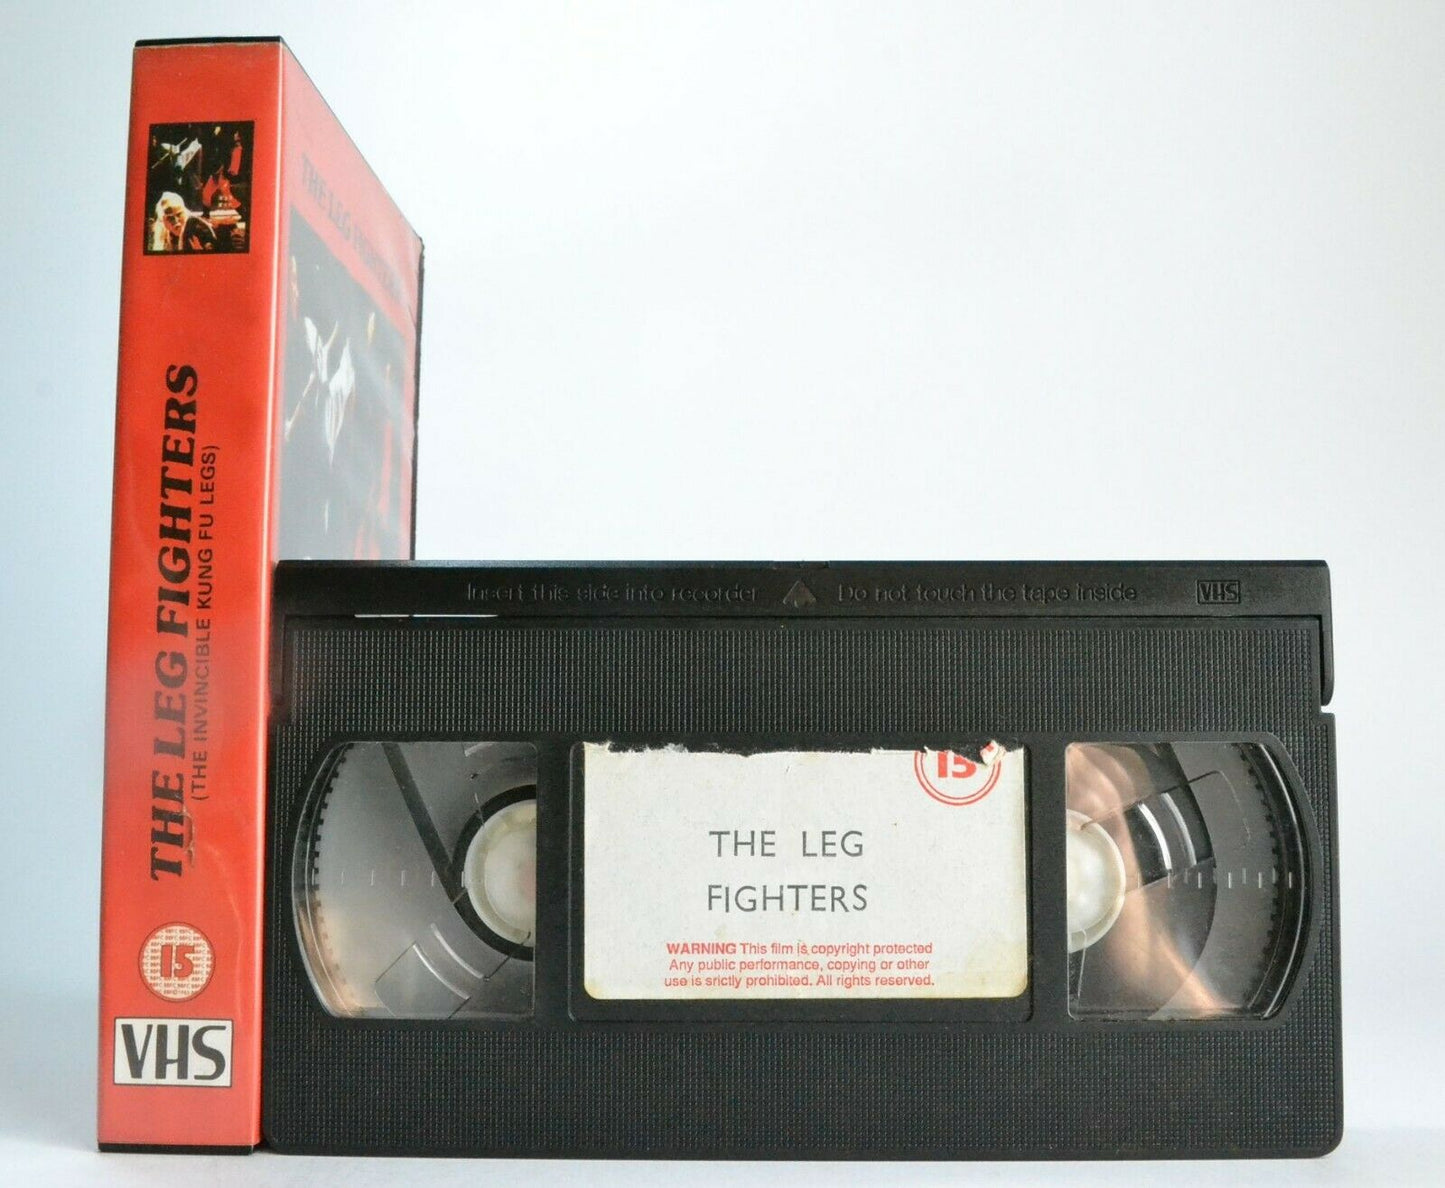 The Leg Fighters [Videotel]: (1980) Hong Kong Martial Arts - Tao-Liang Tan - VHS-